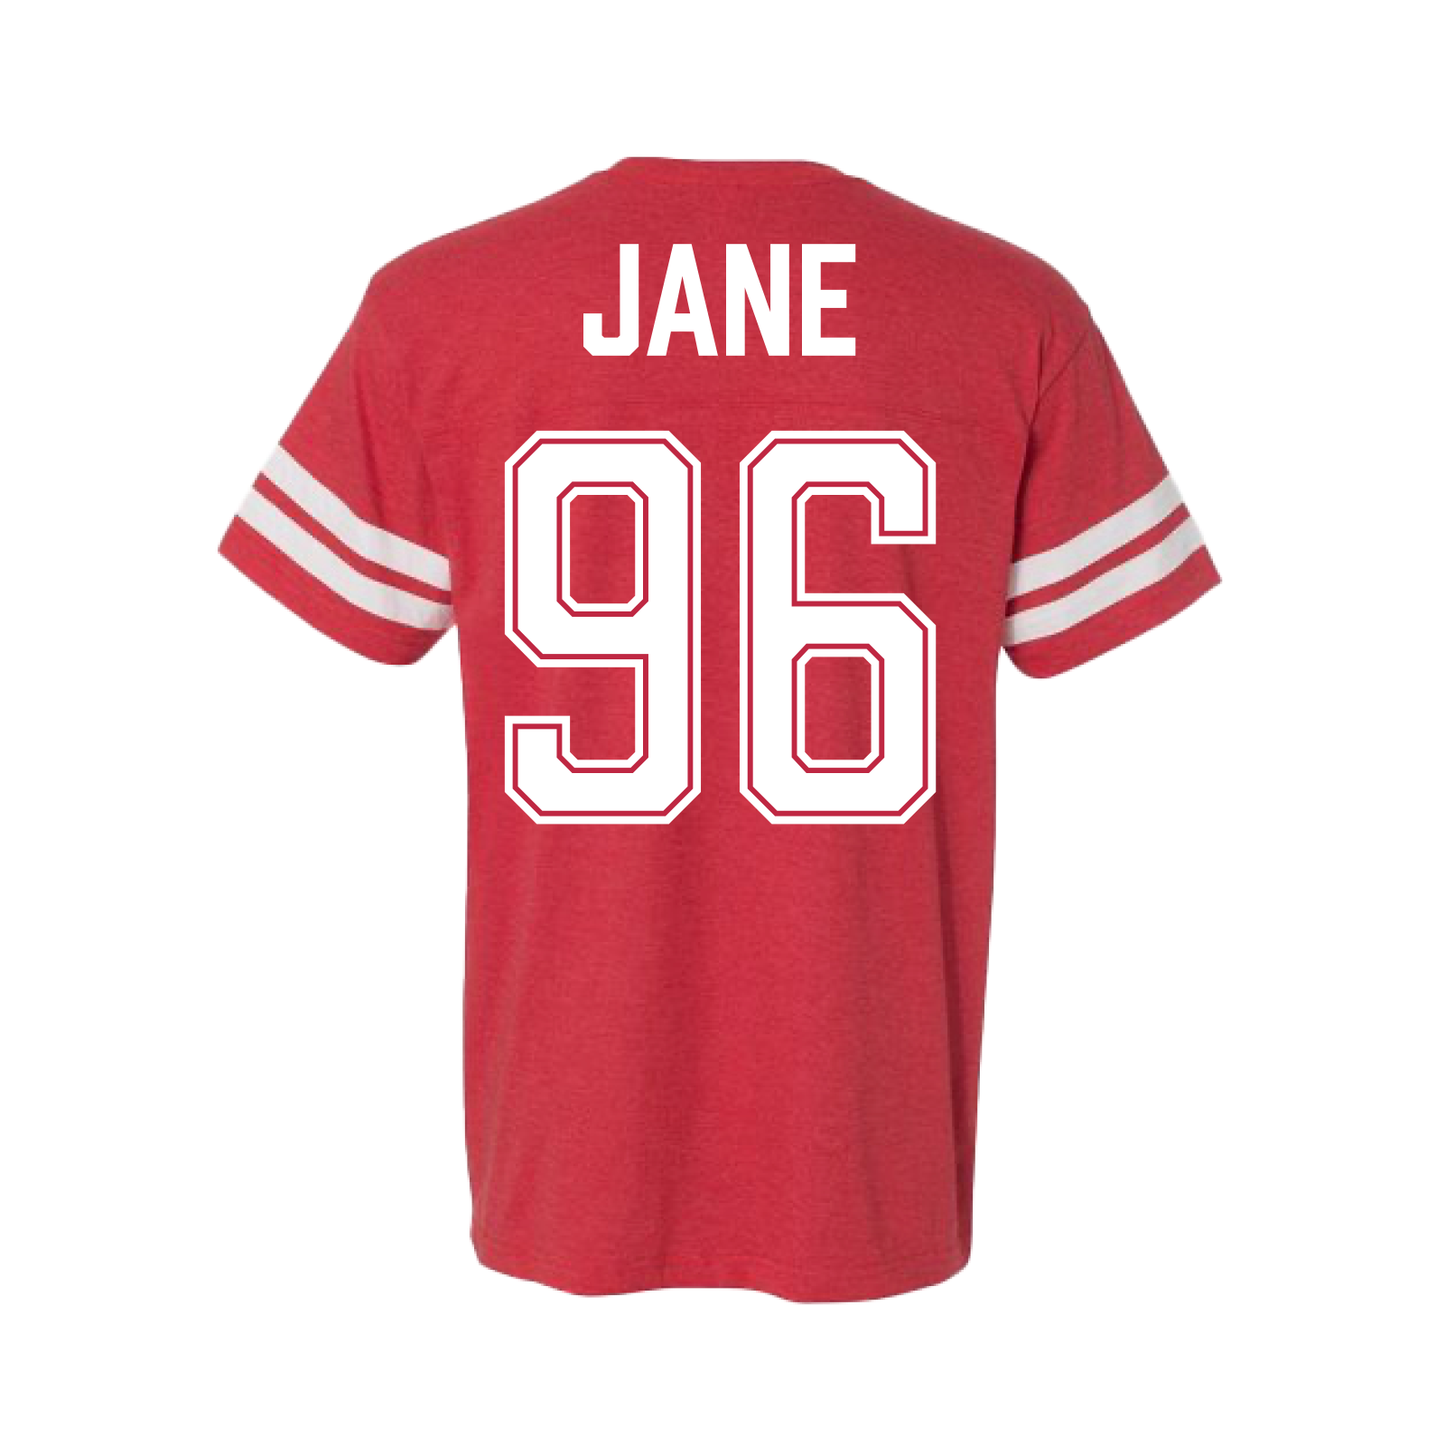 Jane 96 Jersey